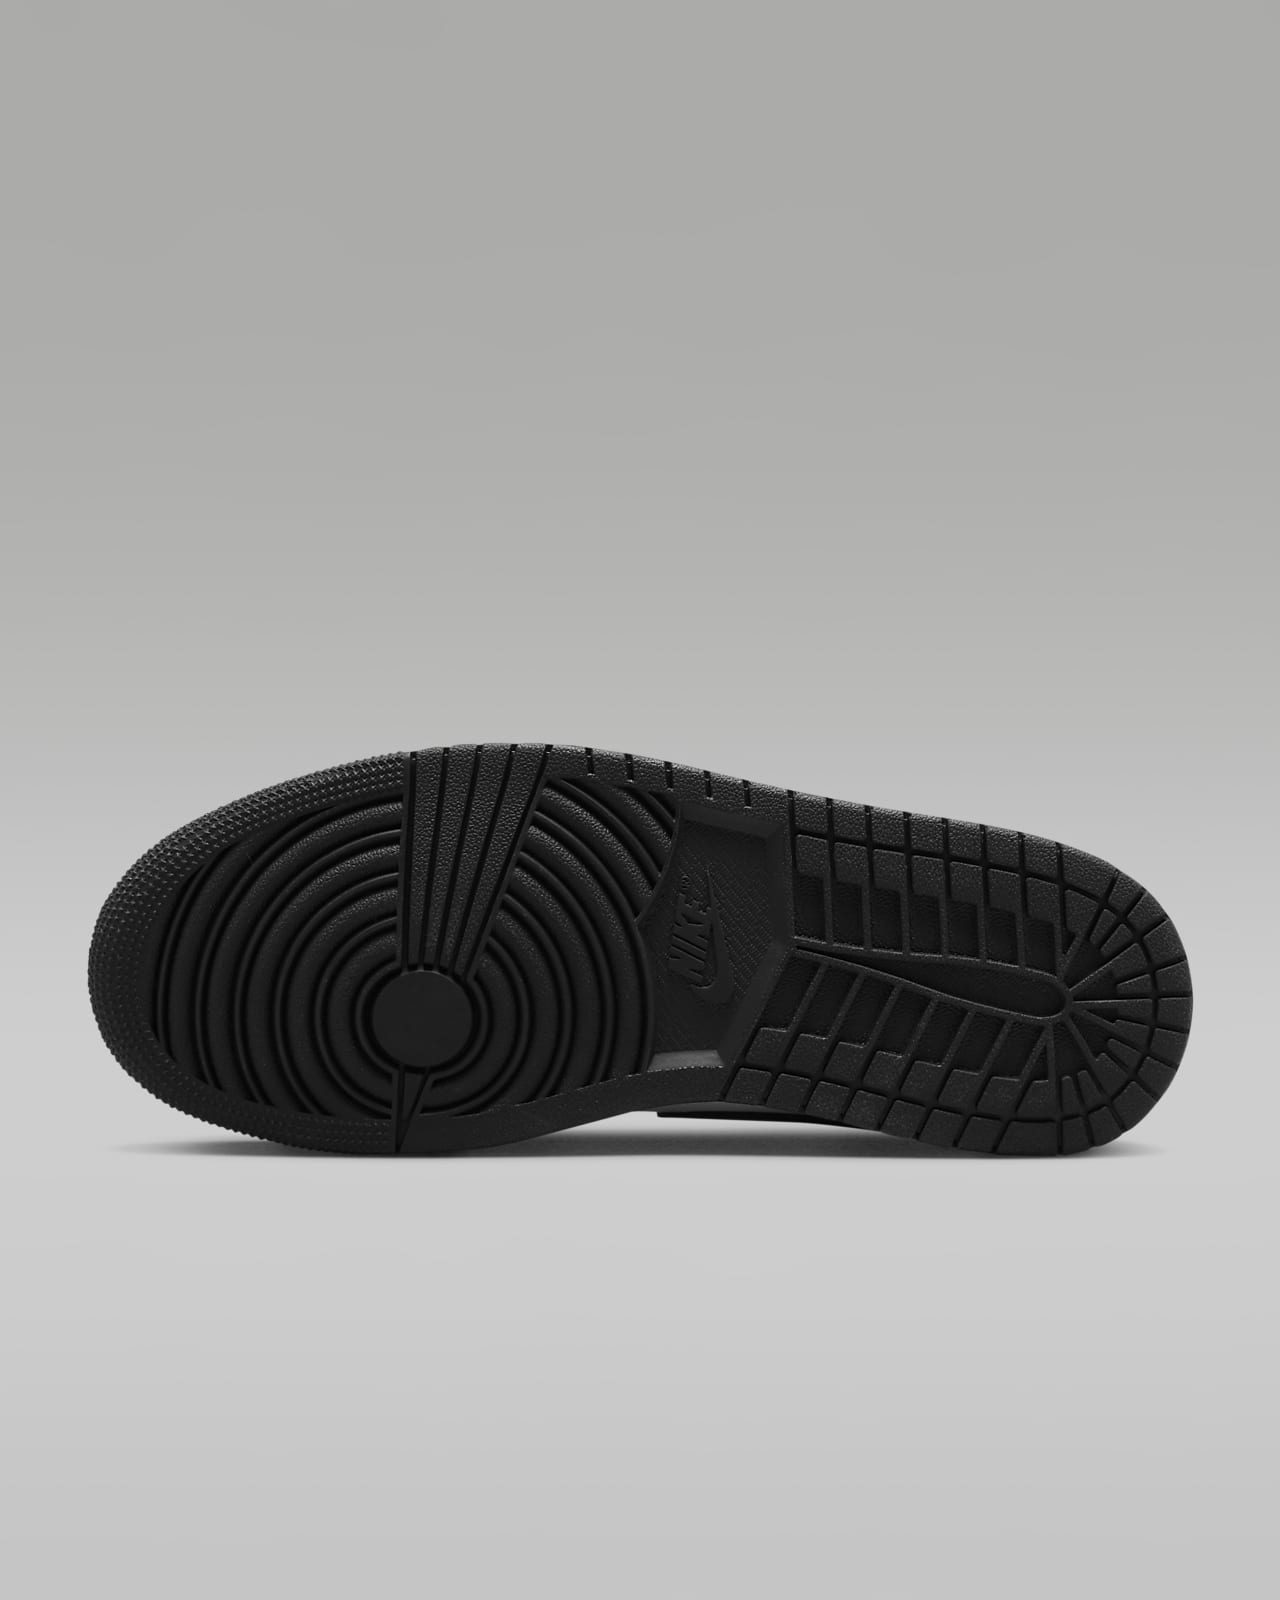 Nike's OG Air Jordan 1 is getting a refresh